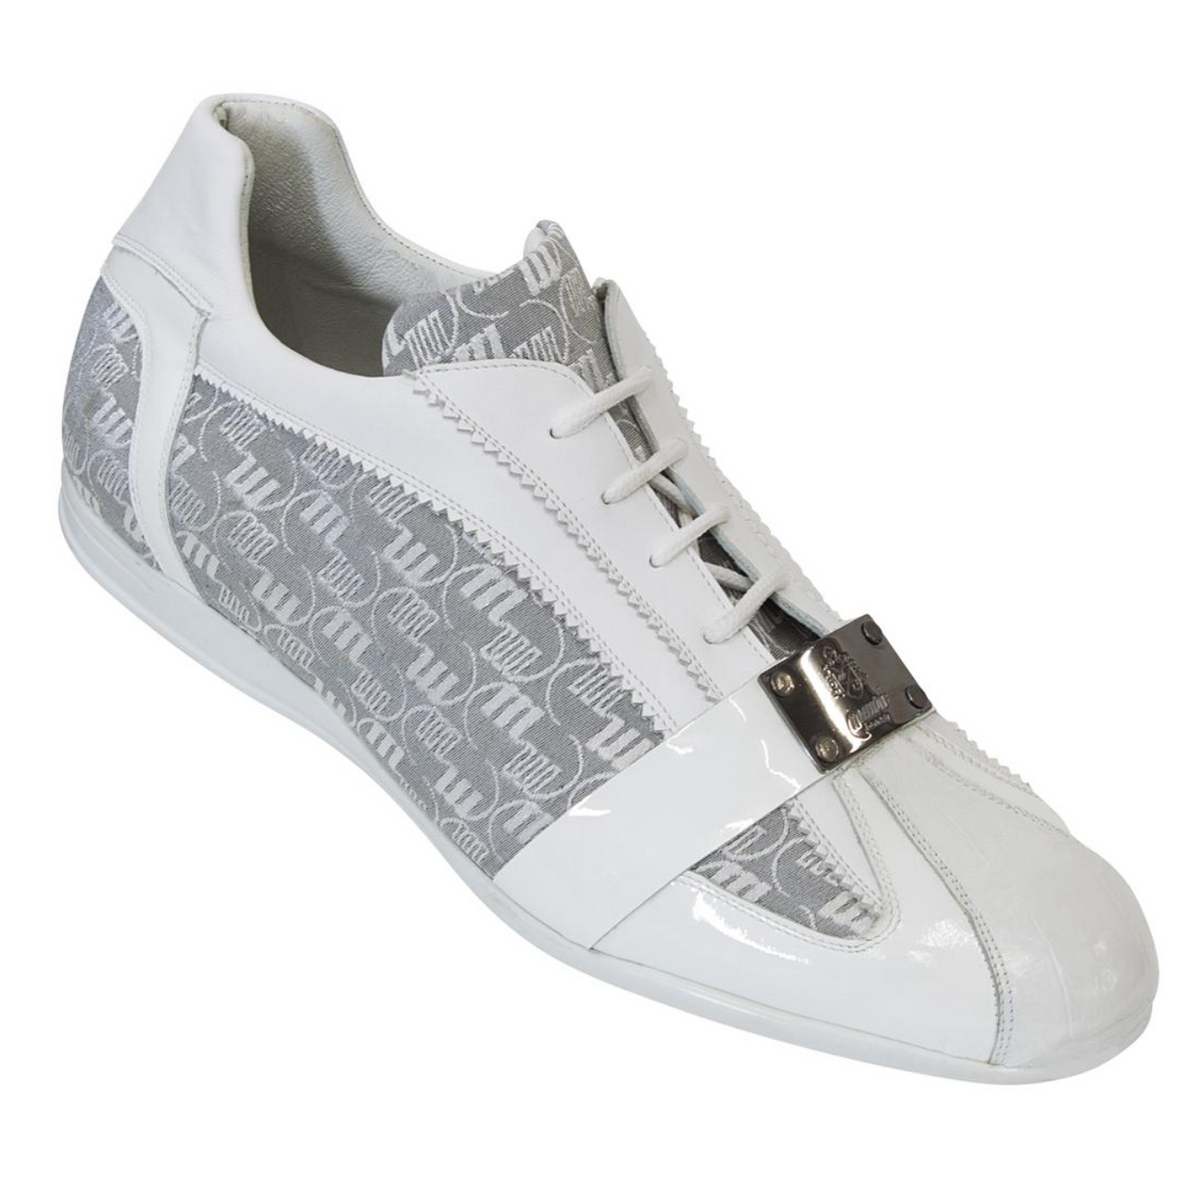 Mauri 8665 White Genuine Crocodile Patent Leather Fabric Sneakers - Dudes Boutique